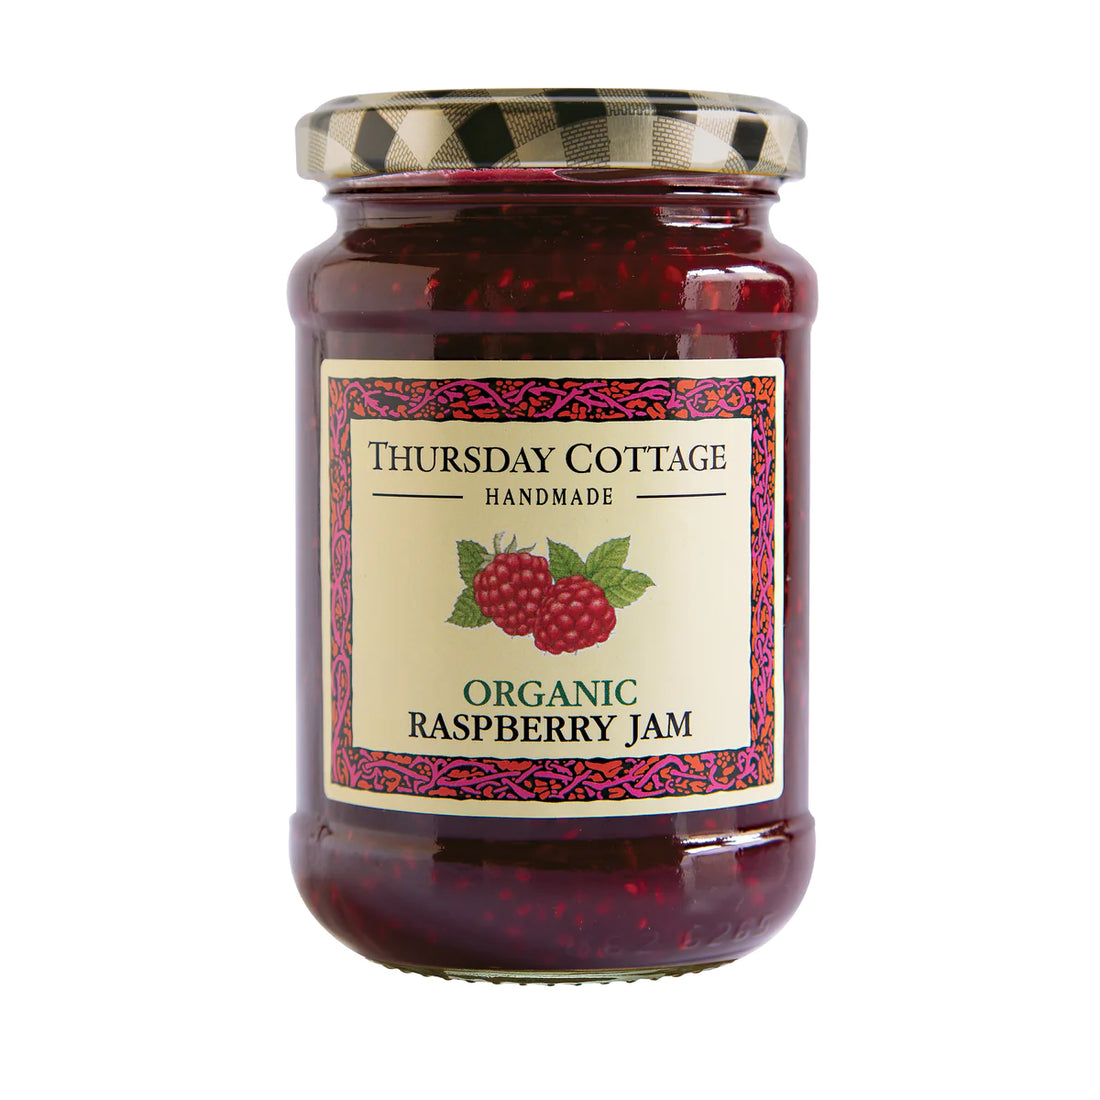 Featured image displaying jar of Thursday Cottage organic Raspberry Jam